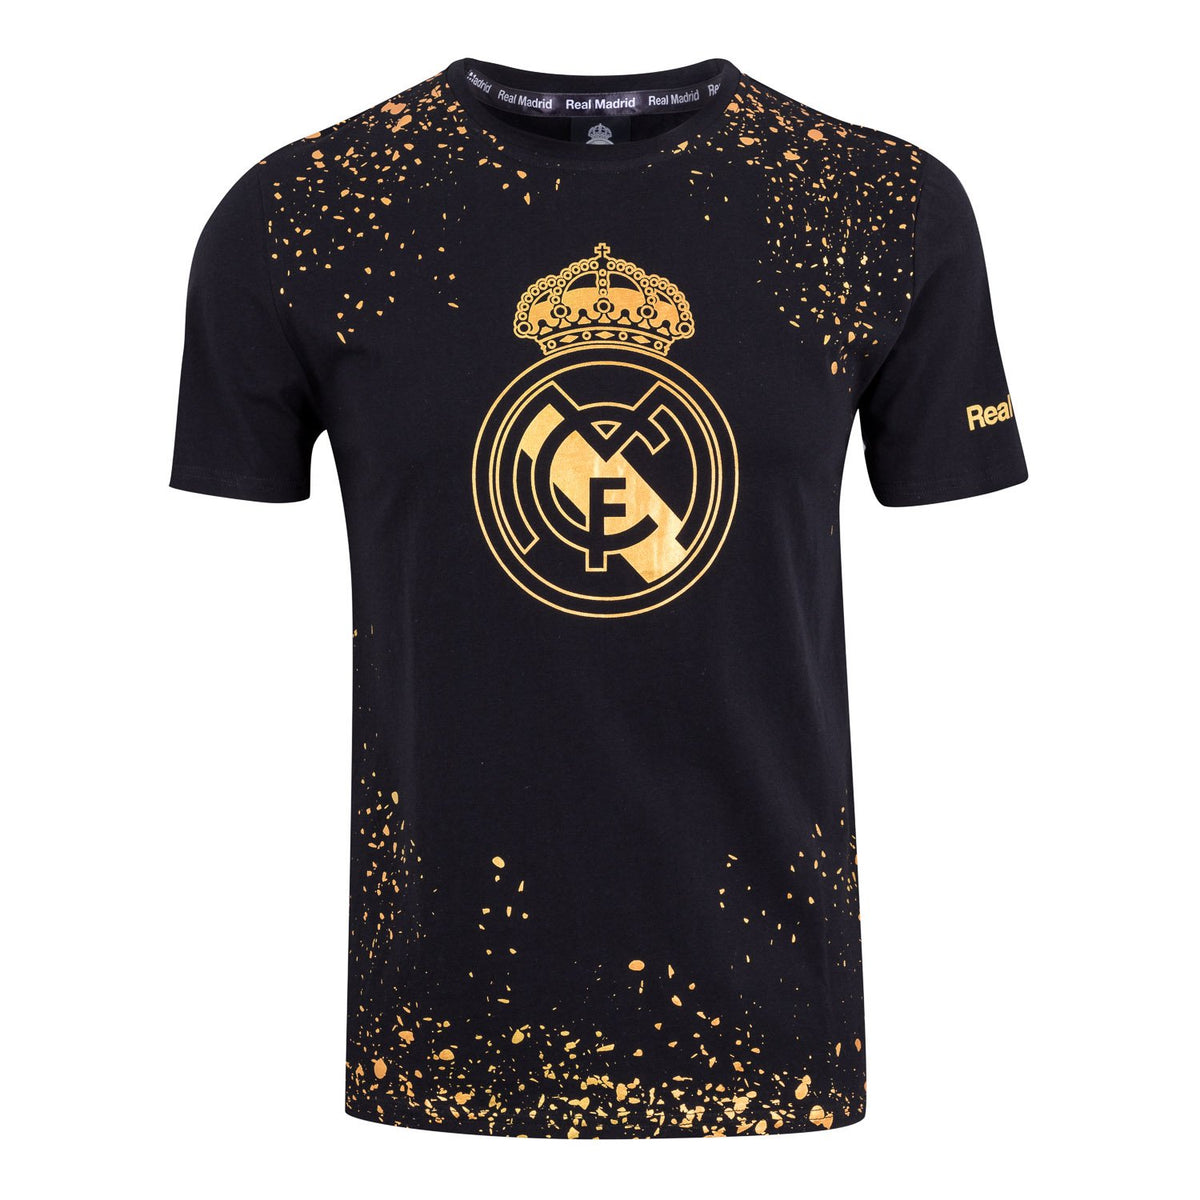 Camiseta Confeti Escudo Real Madrid - Real Madrid CF - EU ...